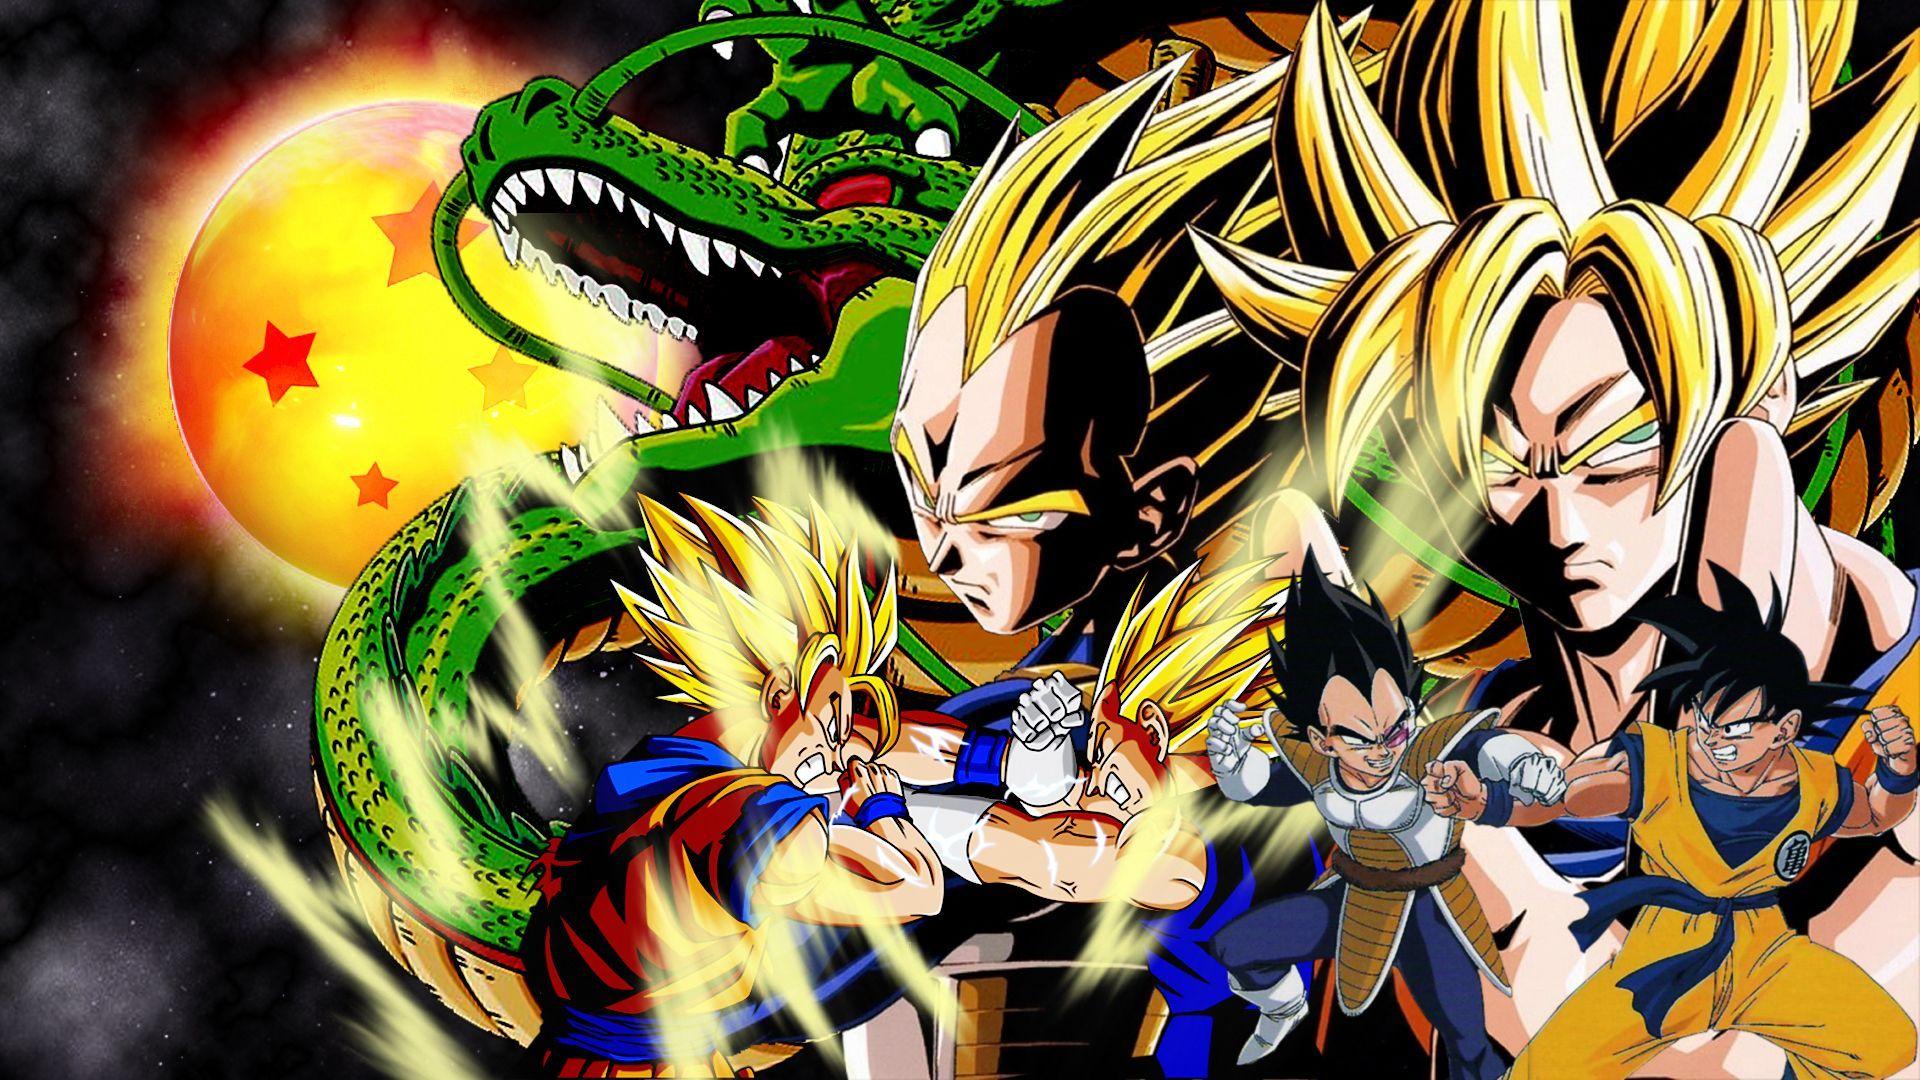 dbz goku vs vegeta. Goku wallpaper .com